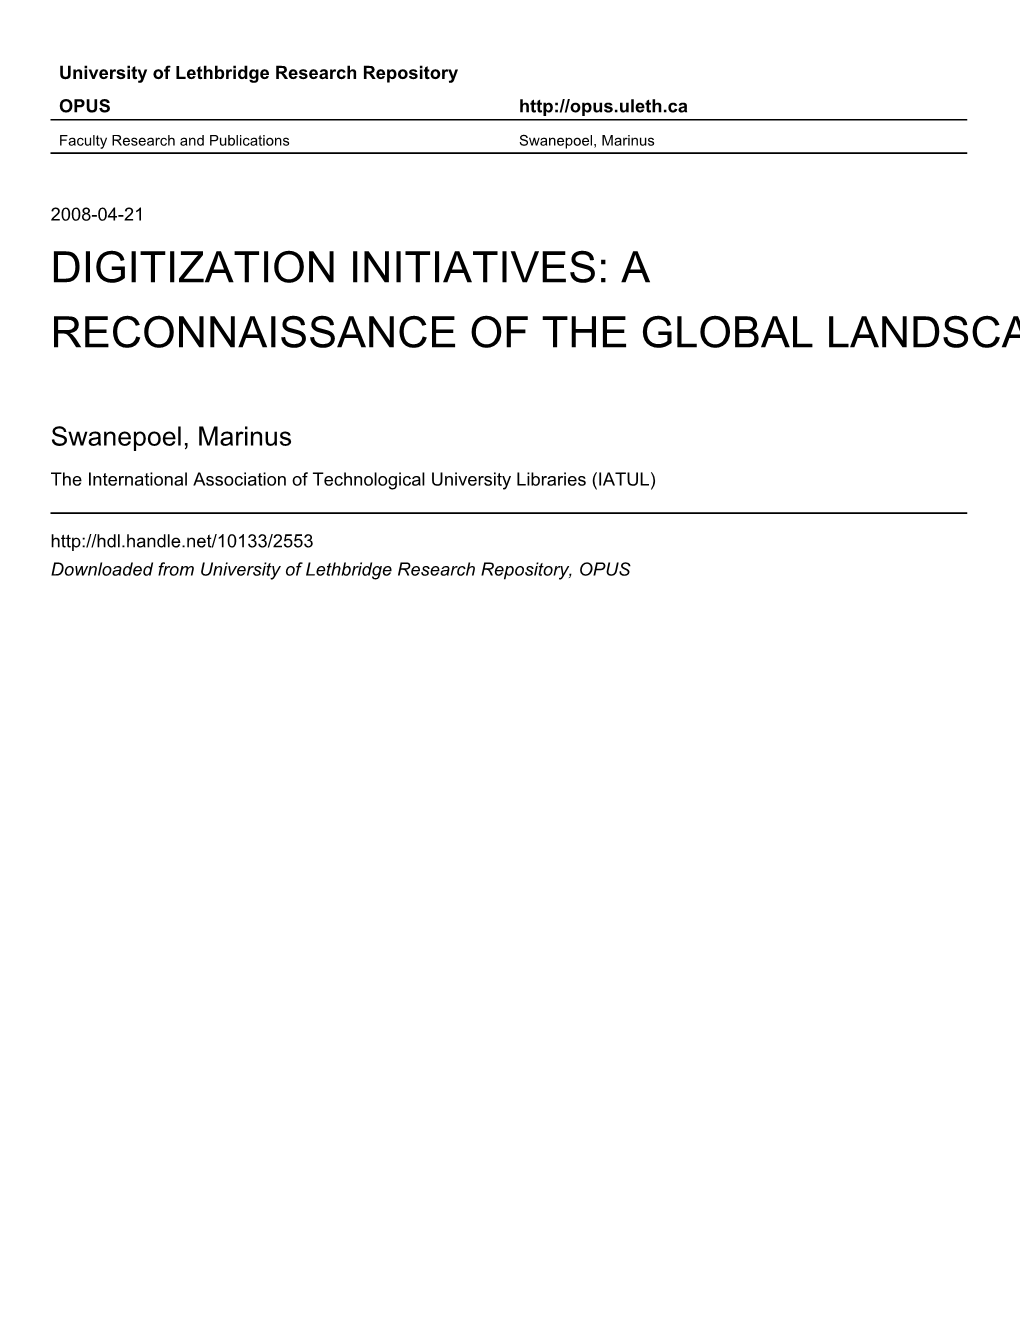 Digitization Initiatives: a Reconnaissance of the Global Landscape